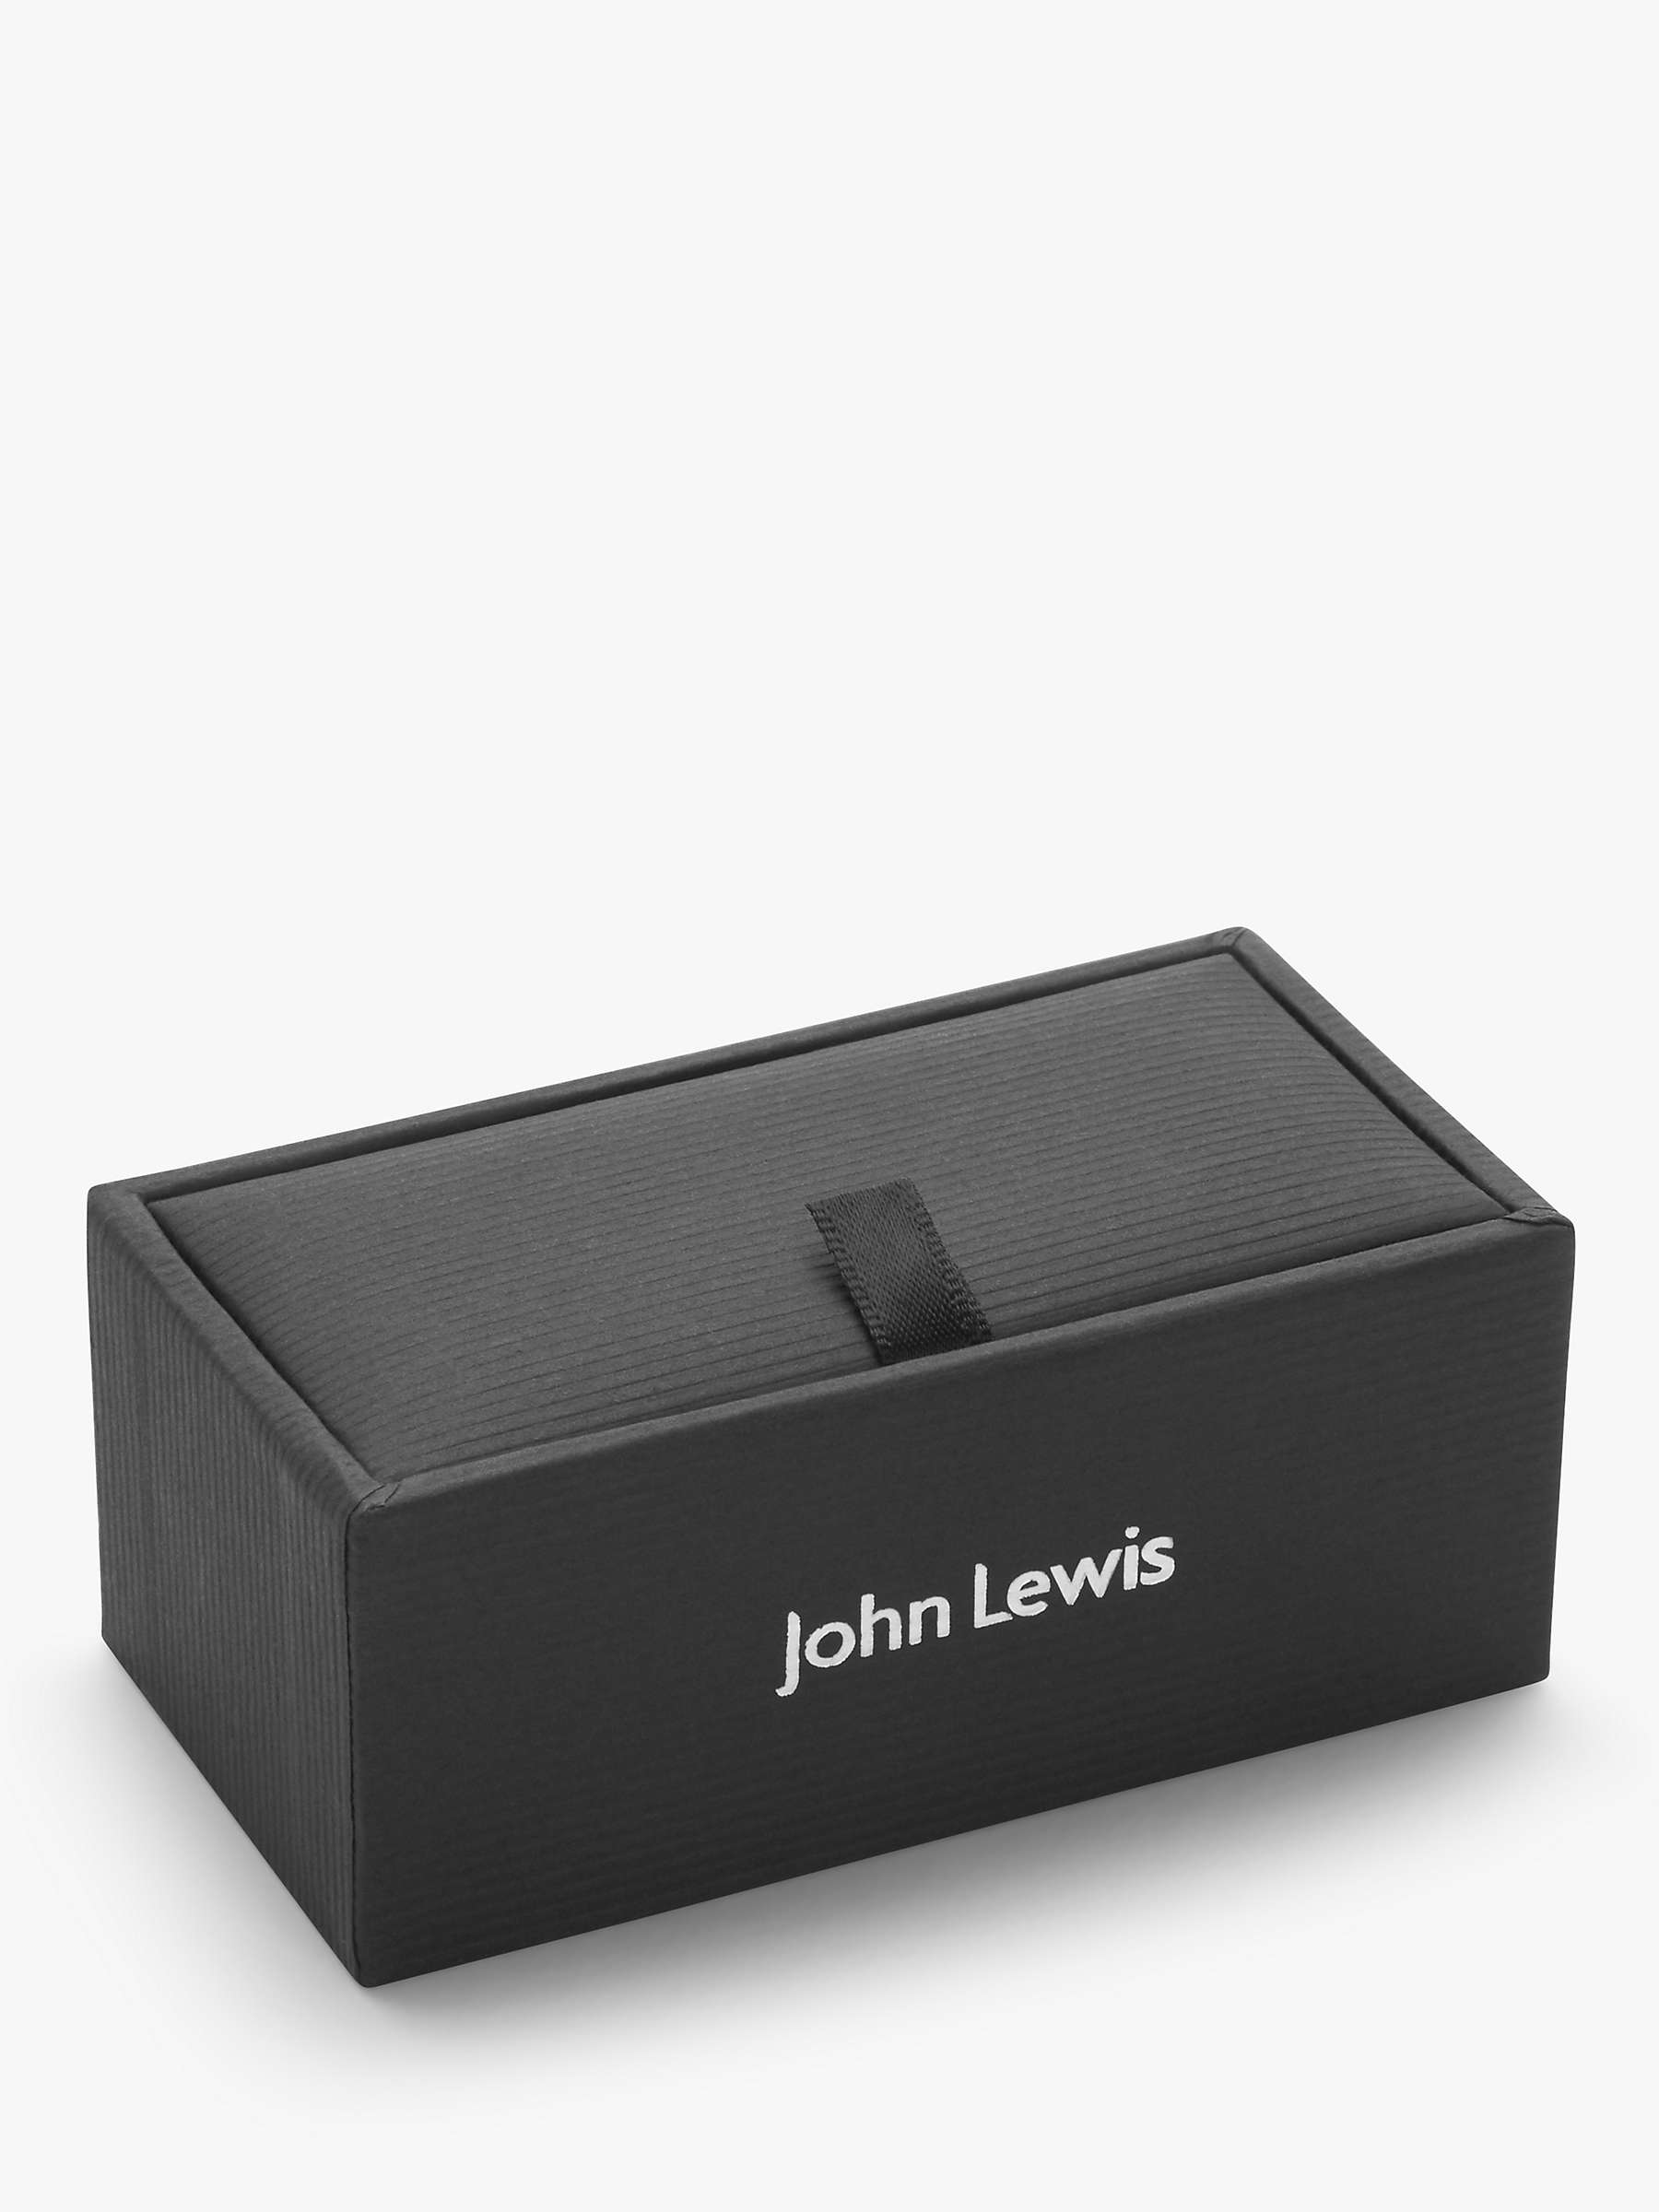 Buy John Lewis Bar Cufflinks, Silver Online at johnlewis.com